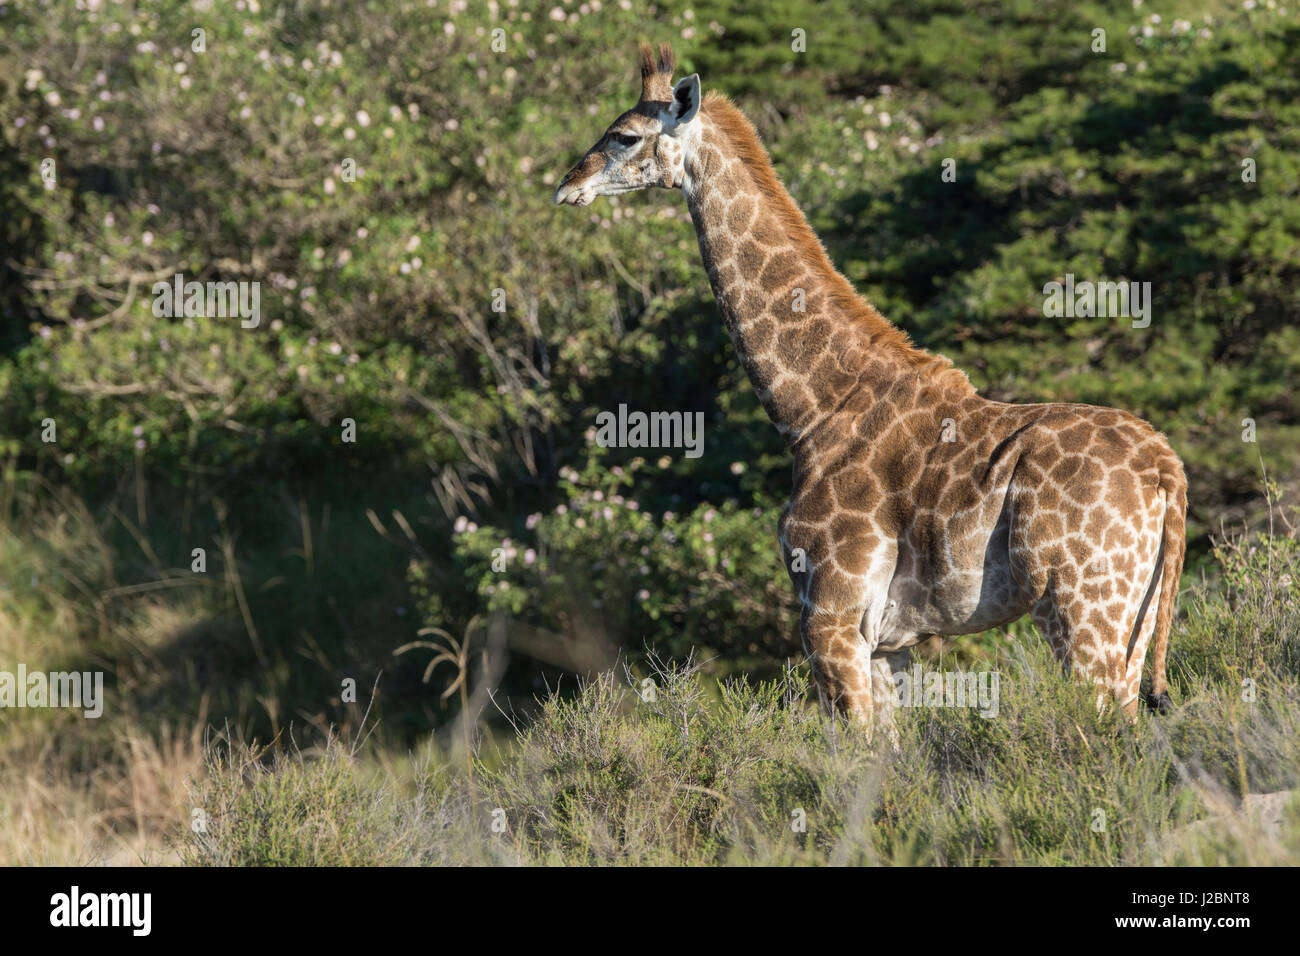 South Africa, Eastern Cape, East London. Inkwenkwezi Game Reserve. Young giraffe (Wild, Giraffa camelopardalis) in grassland habitat. Stock Photo